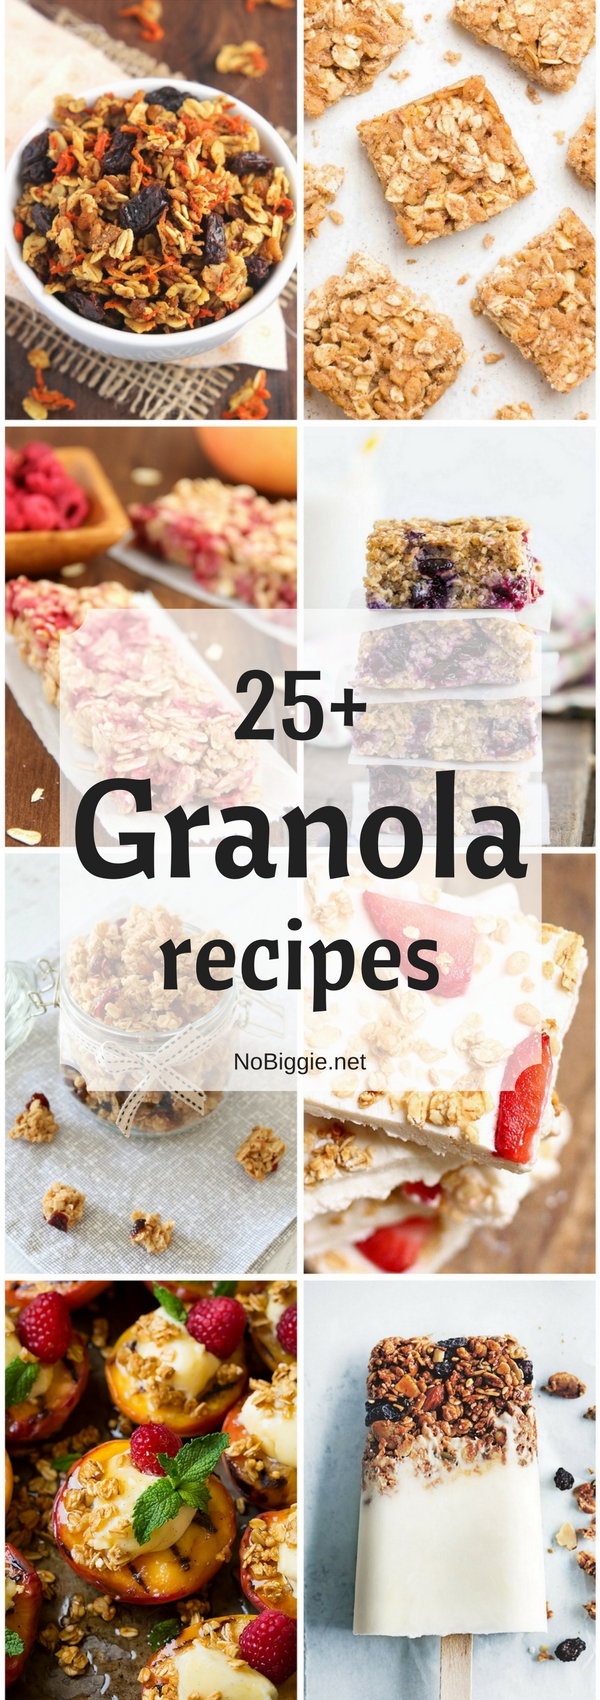 25+ Granola recipes | NoBiggie.net